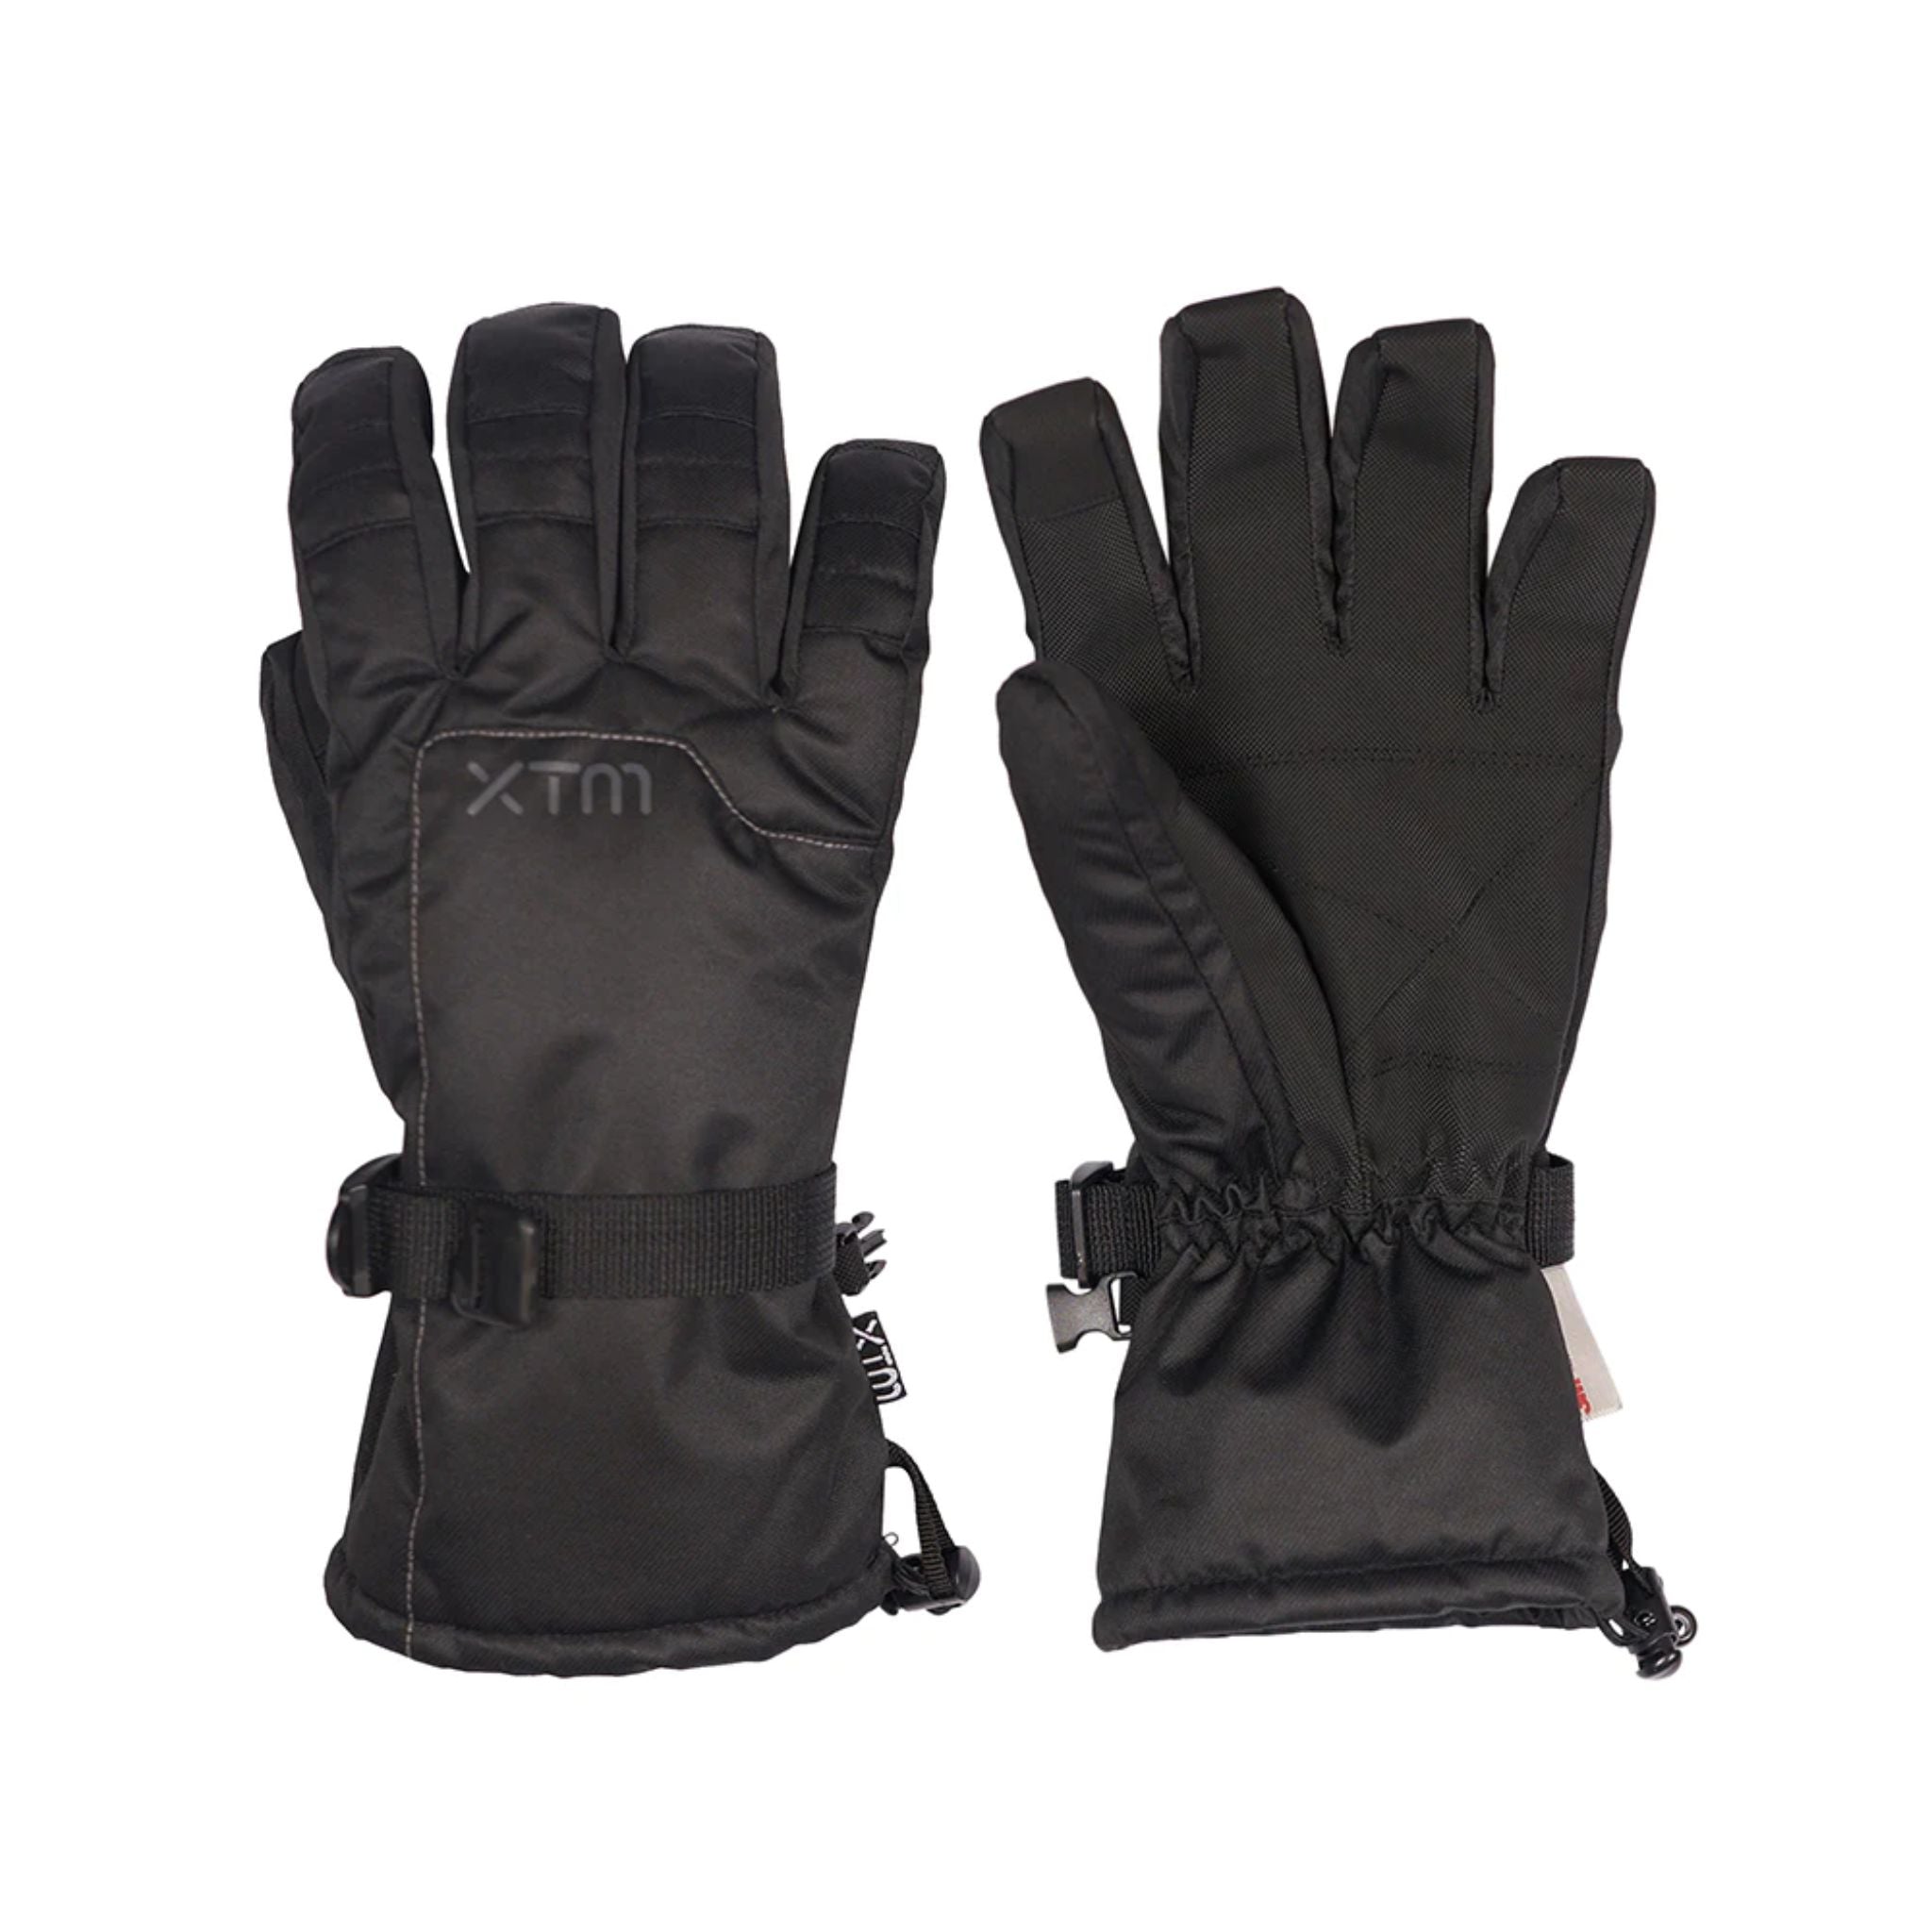 XTM Kids Zima II Ski Glove - Black